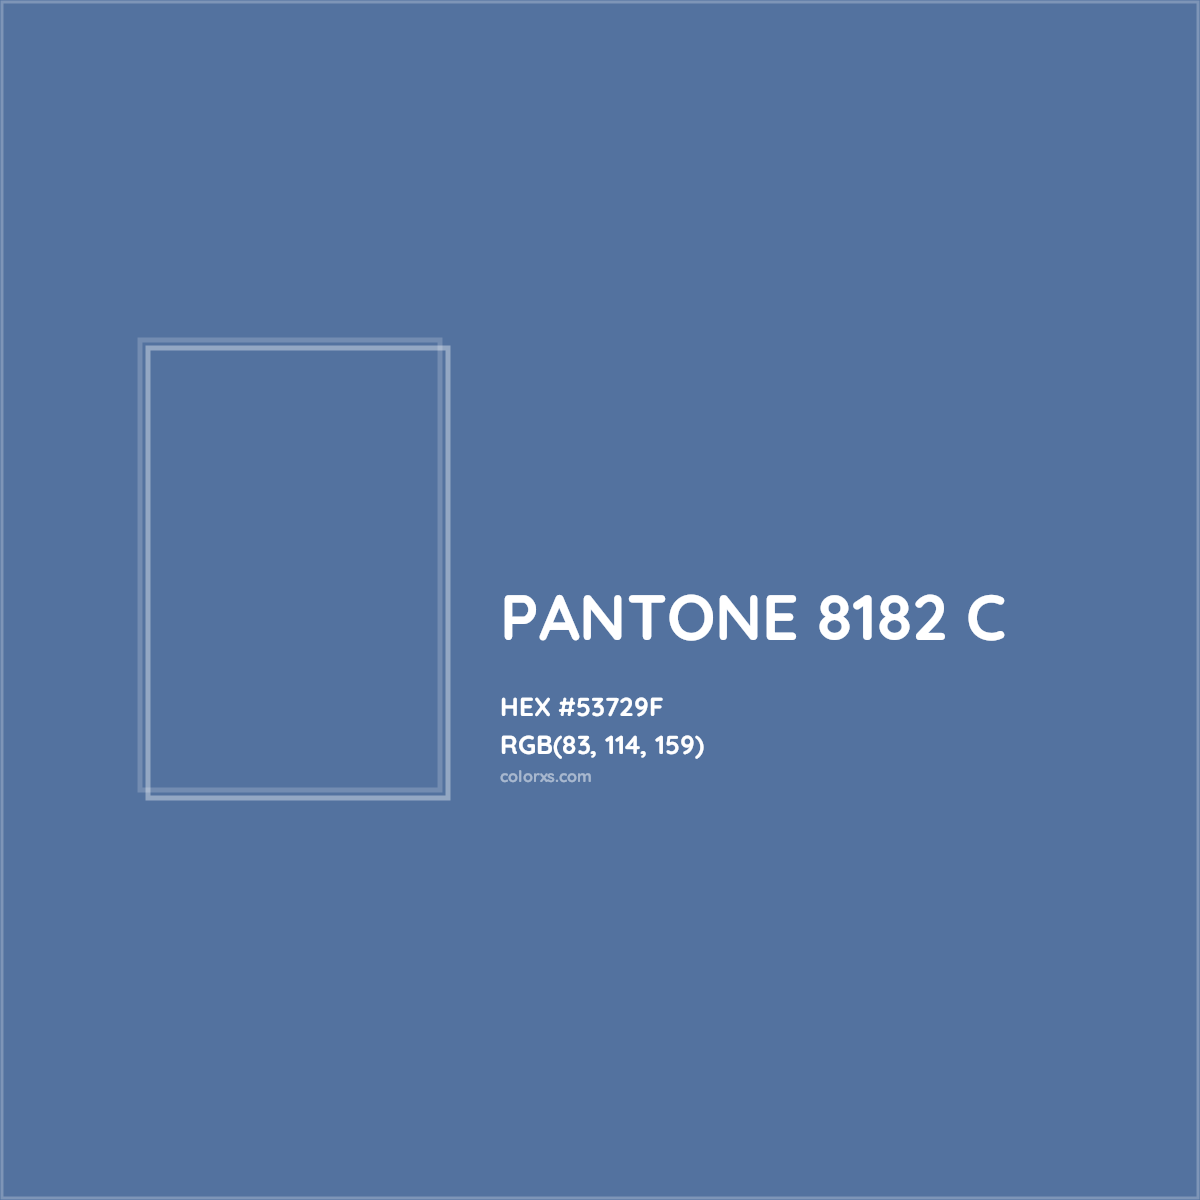 HEX #53729F PANTONE 8182 C CMS Pantone PMS - Color Code